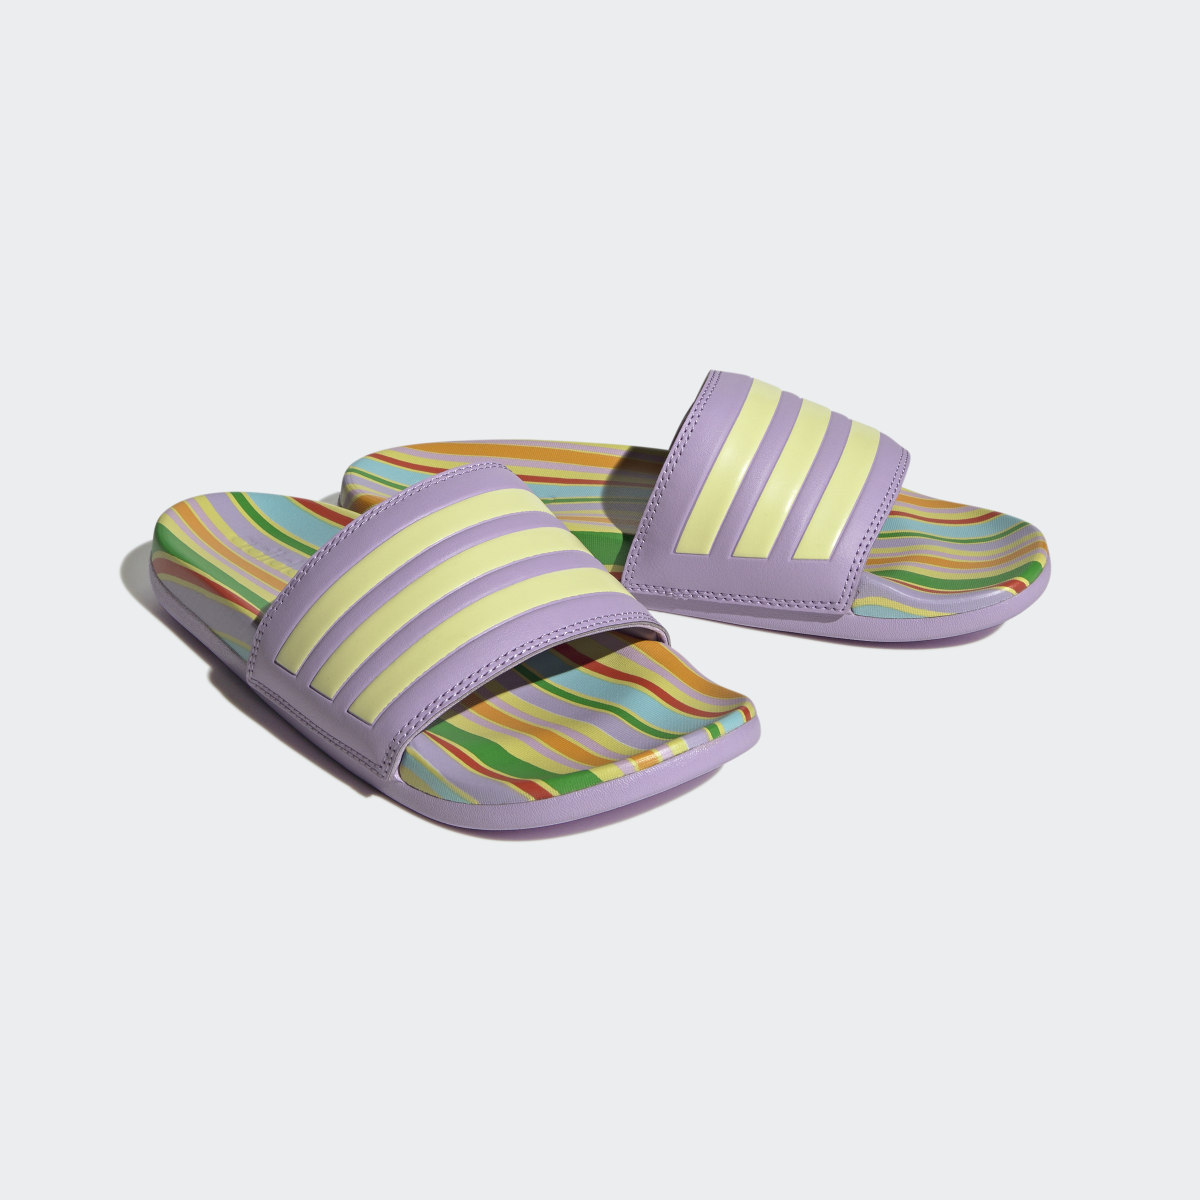 Adidas Adilette Comfort Sandals. 5